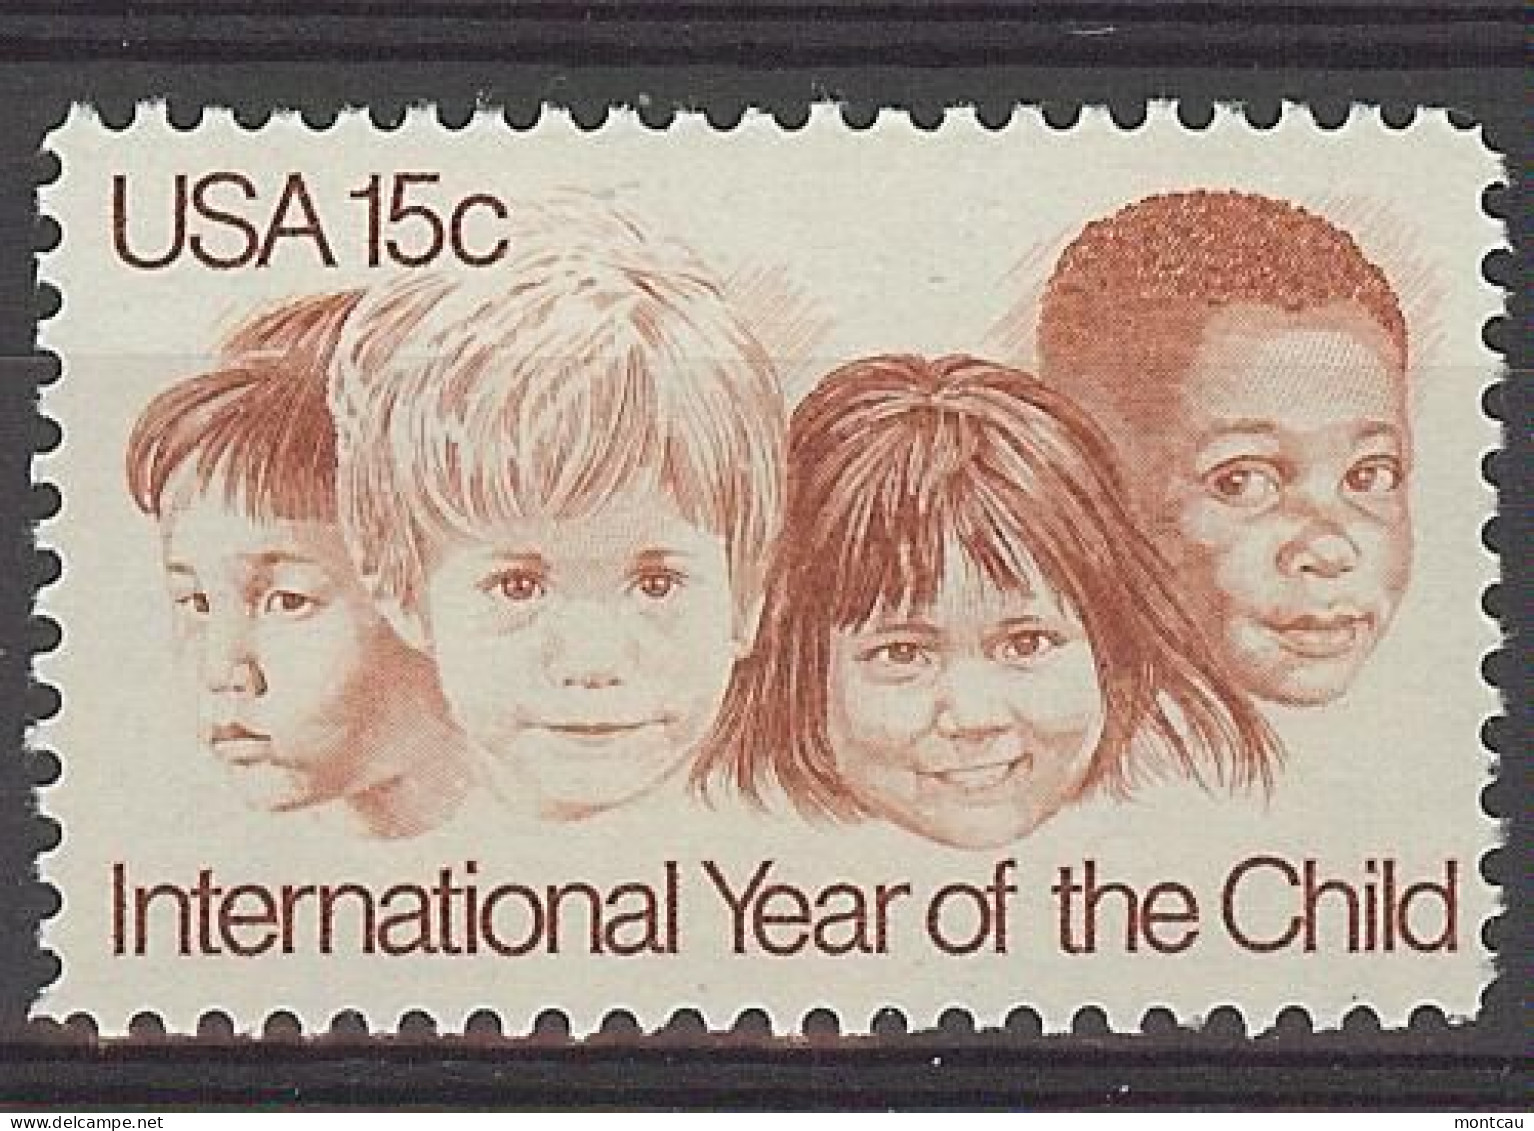 USA 1979.  Year Od The Child Sn 1772  (**) - Neufs